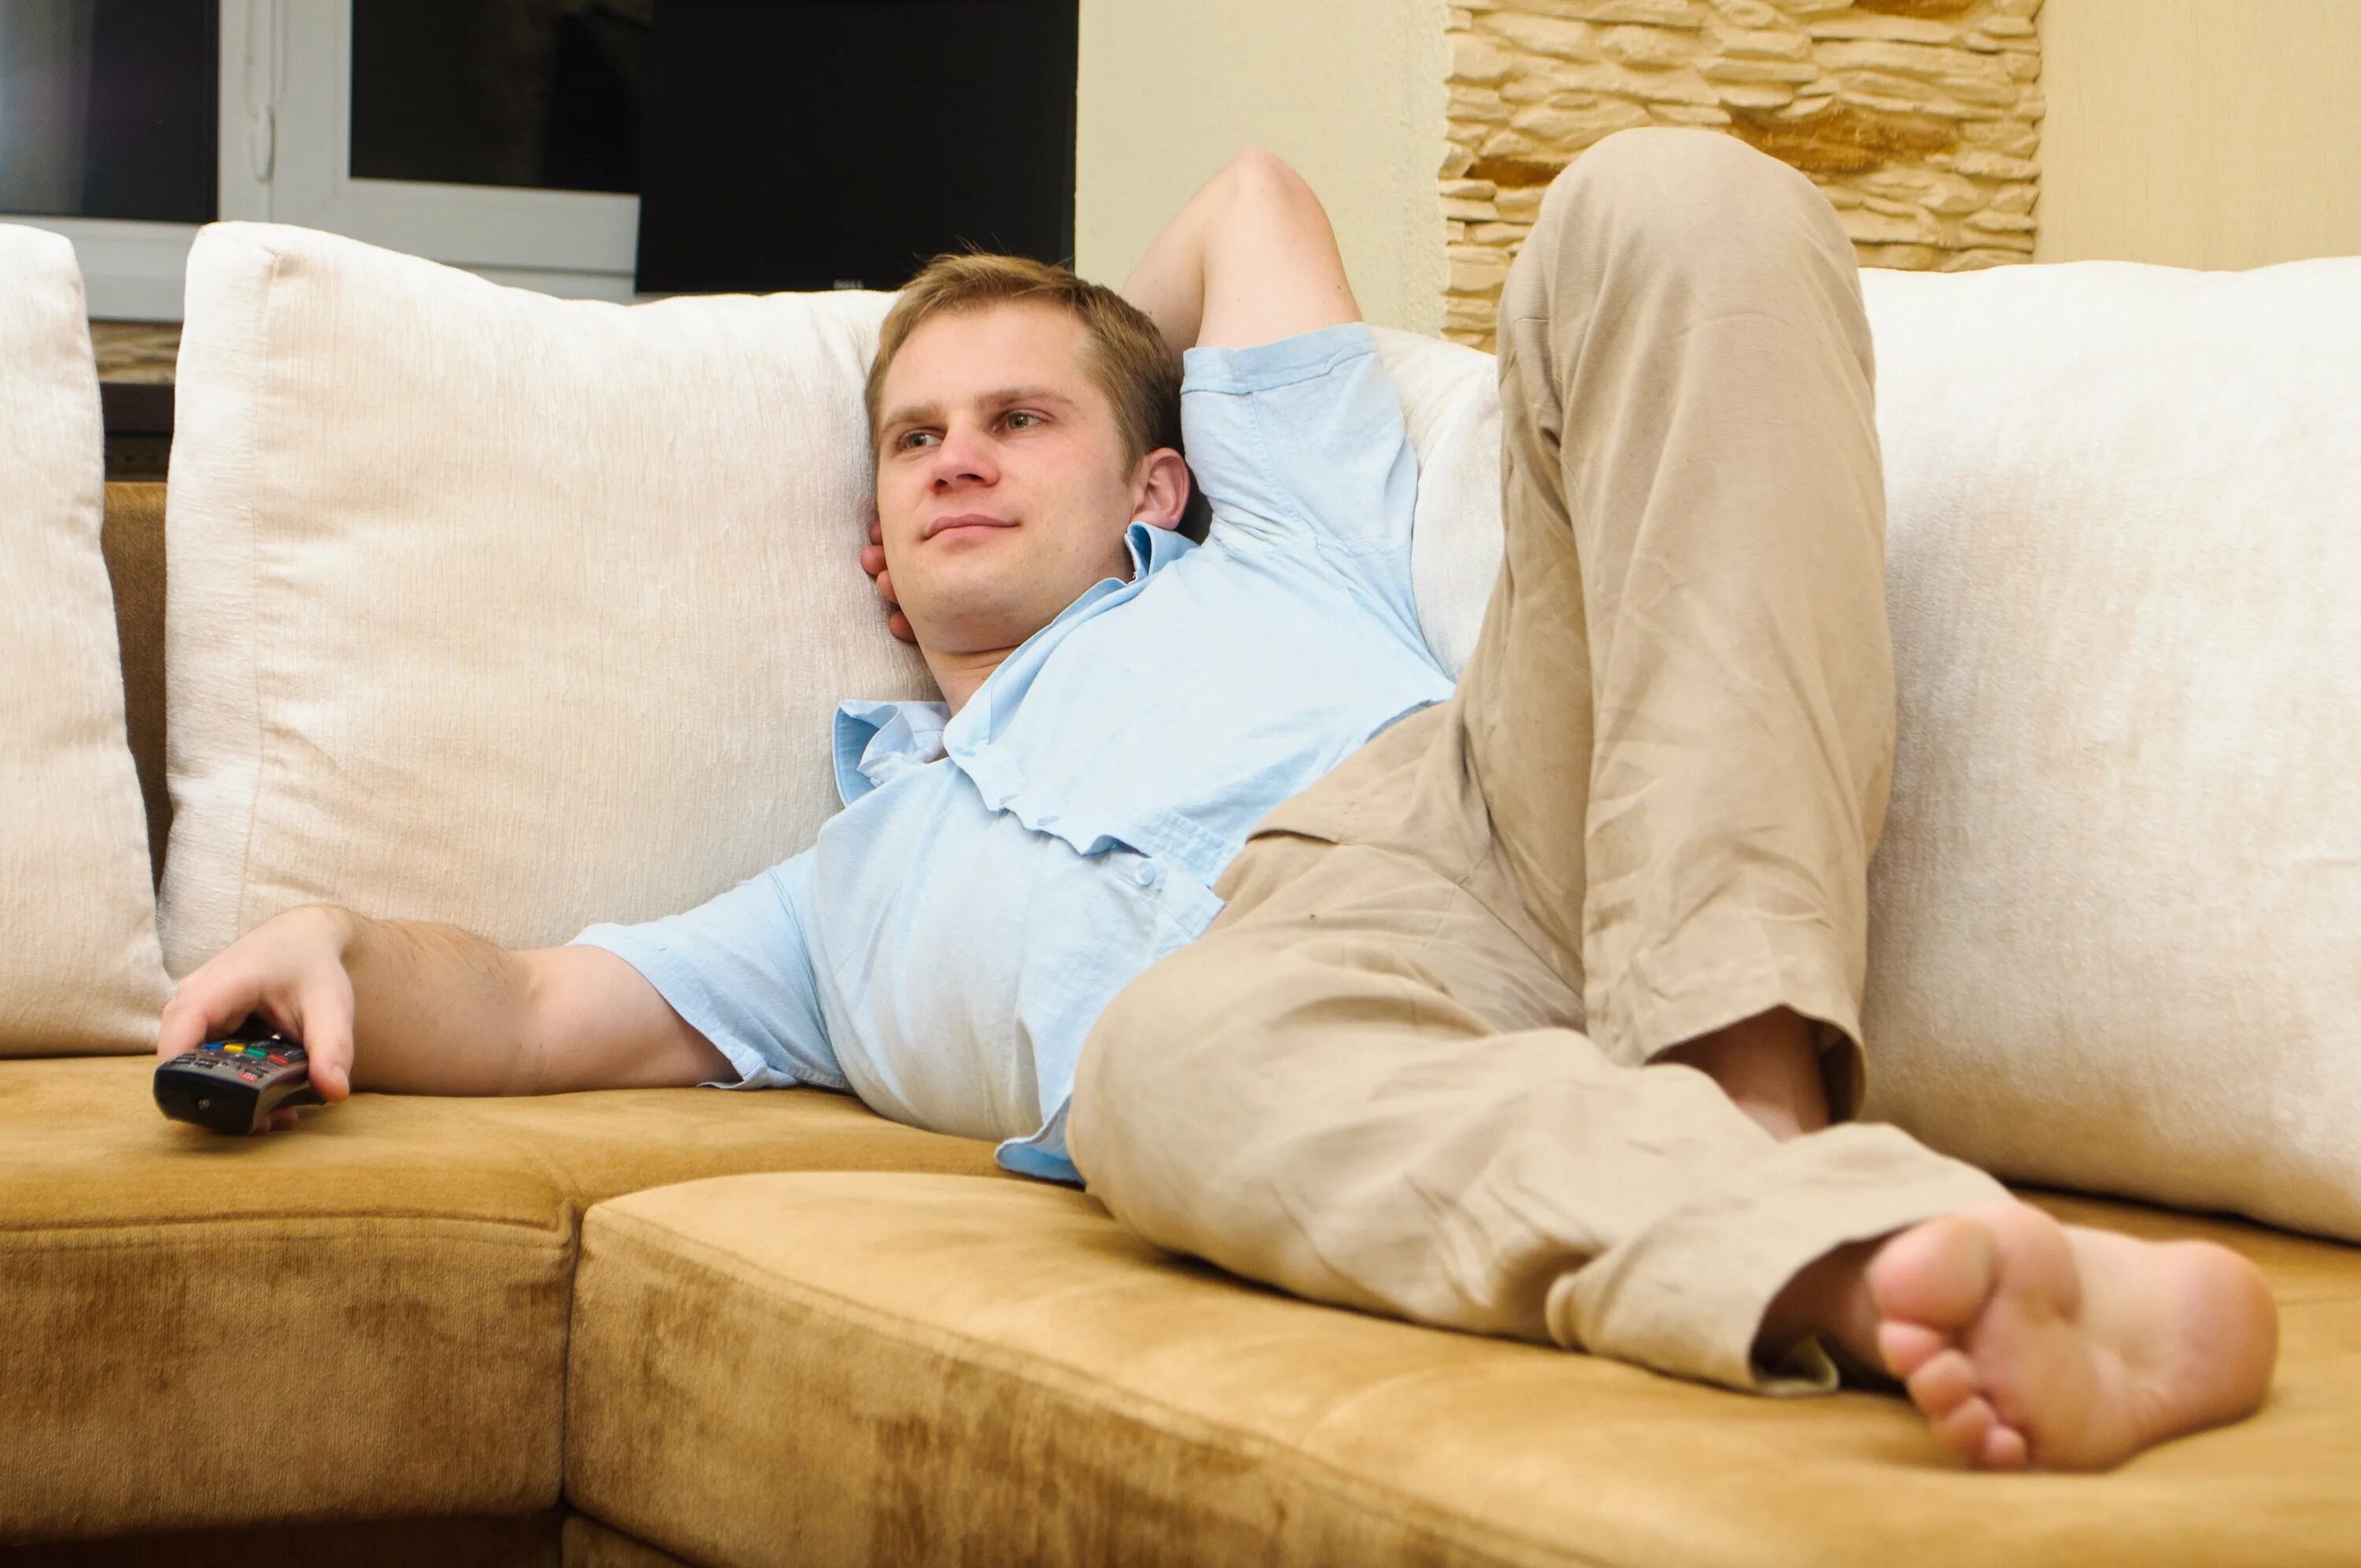 Сижу перед телевизором. Лежит на диване. Человек лежит на диване. Человек отдыхает на диване. Мужчина на диване.